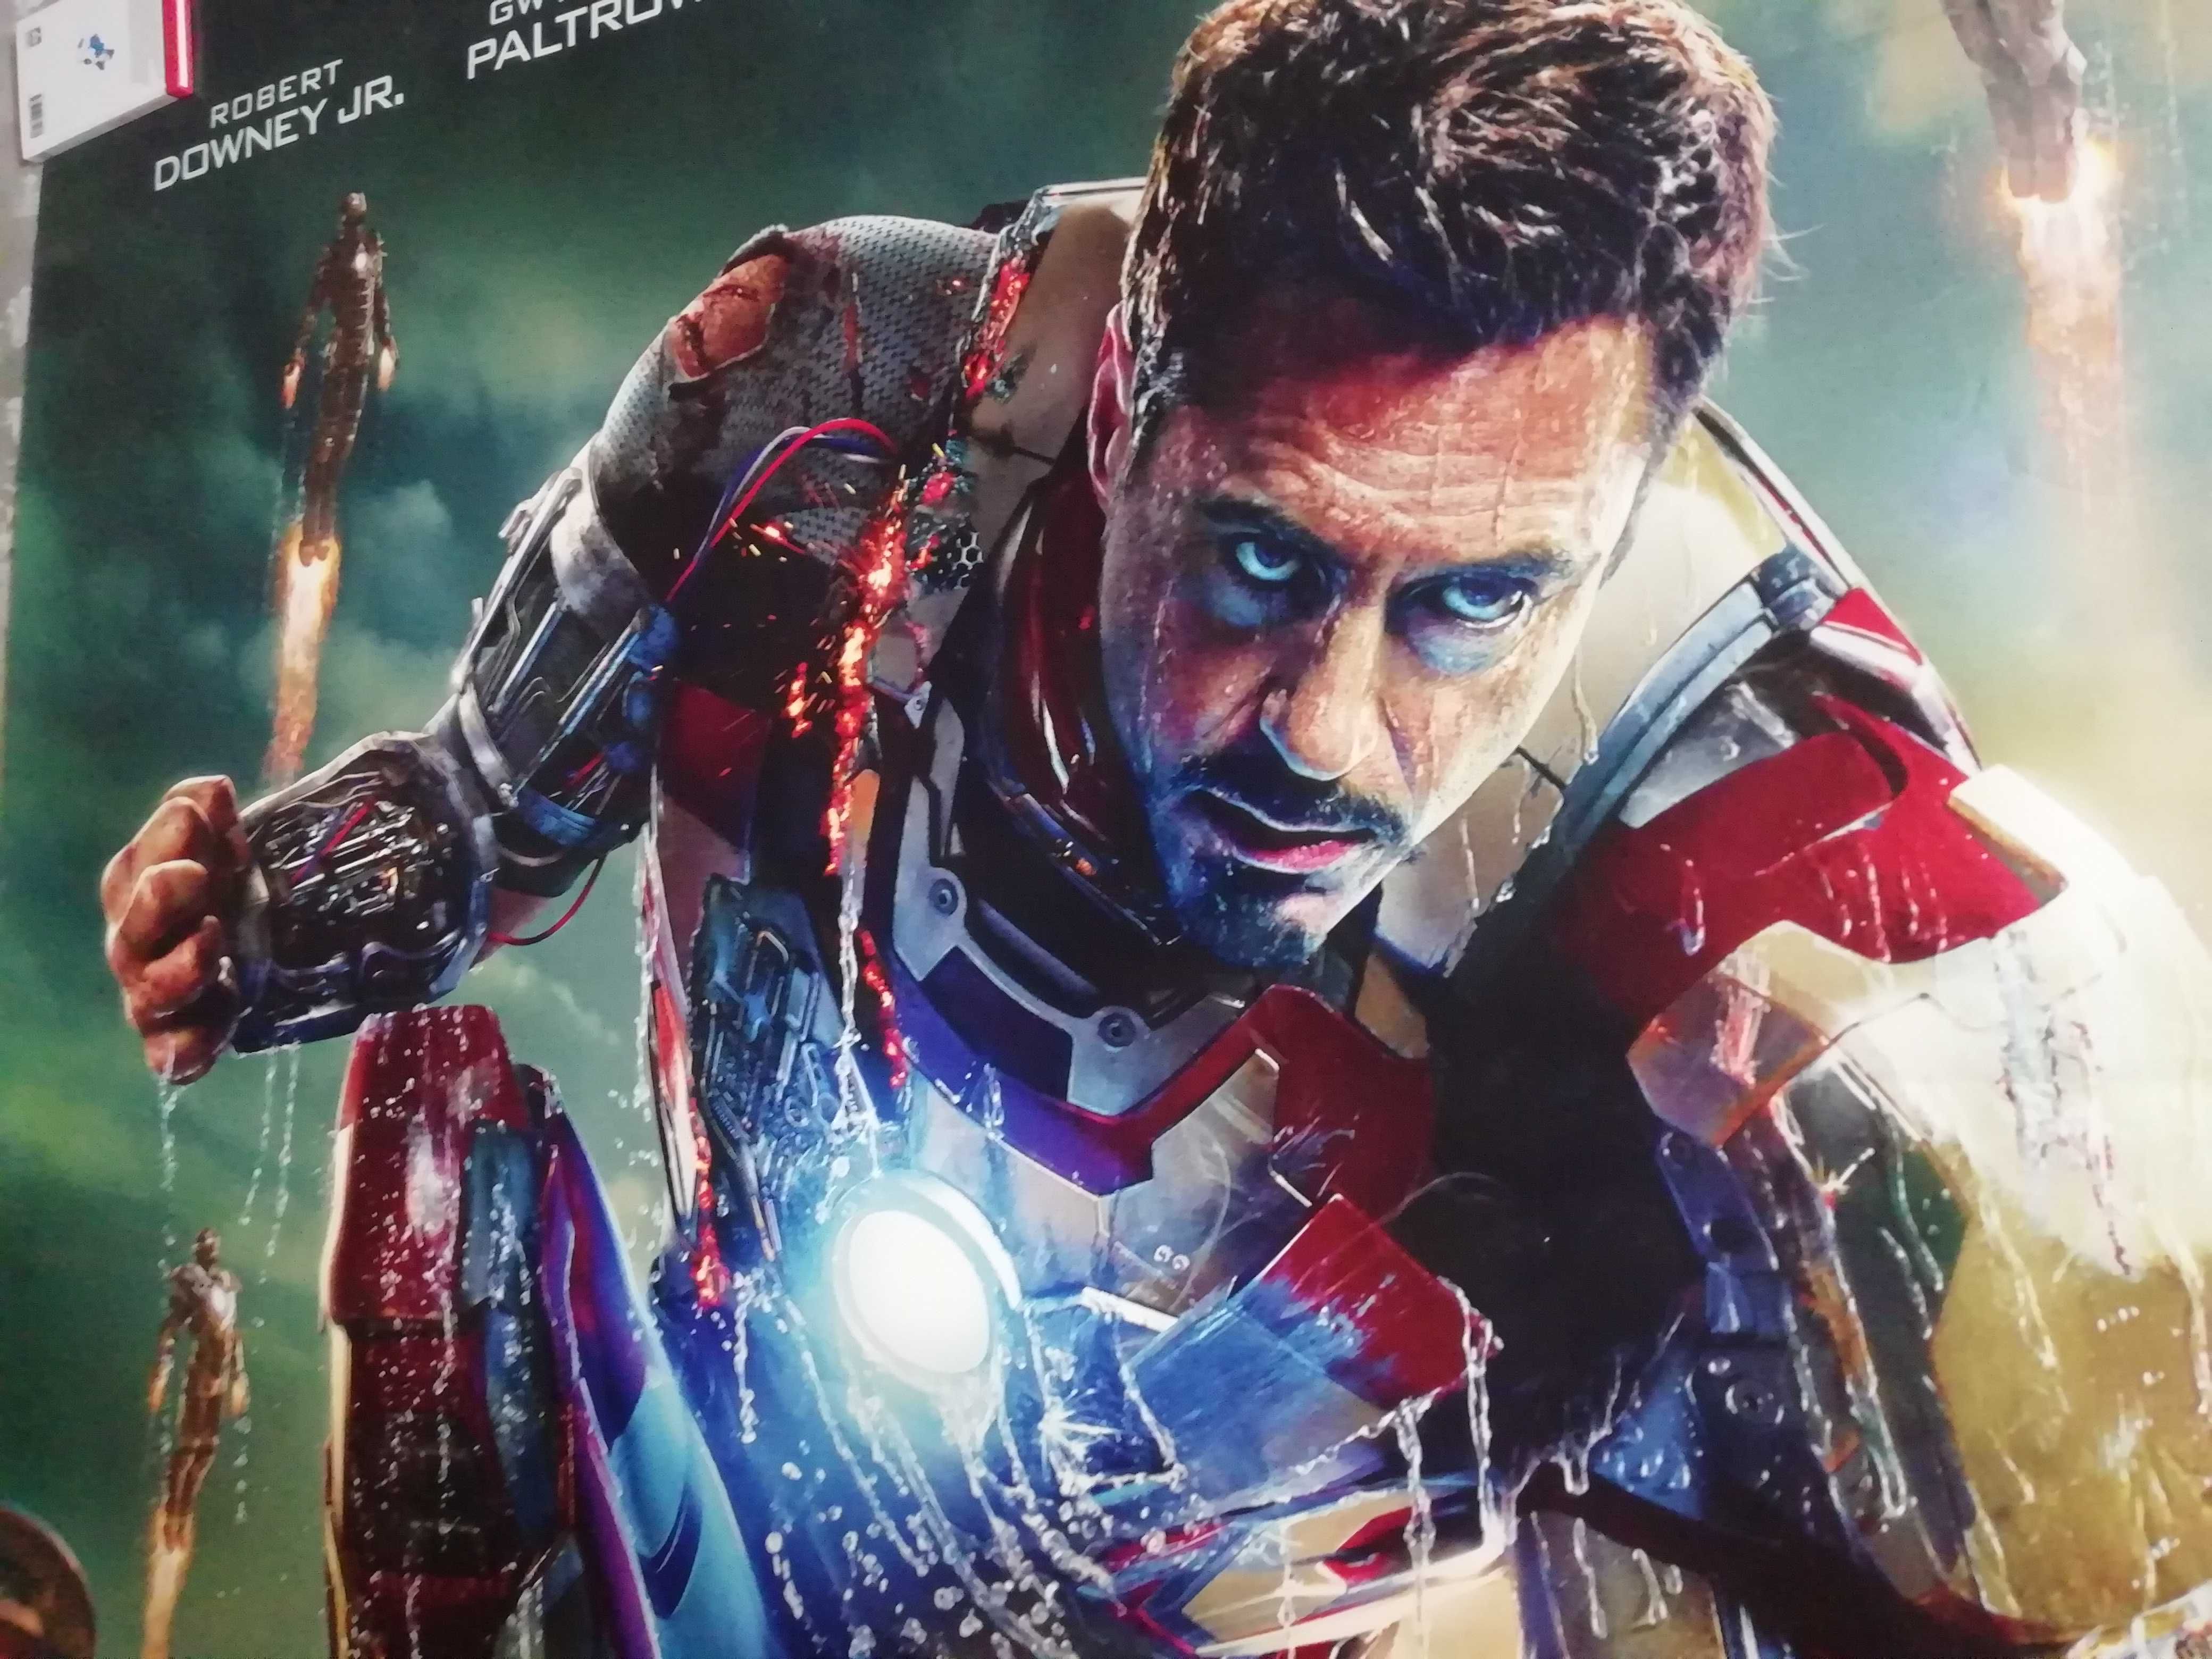 Iron man 3 - Marvel - Incrível Cartaz de cinema original - 2,40m